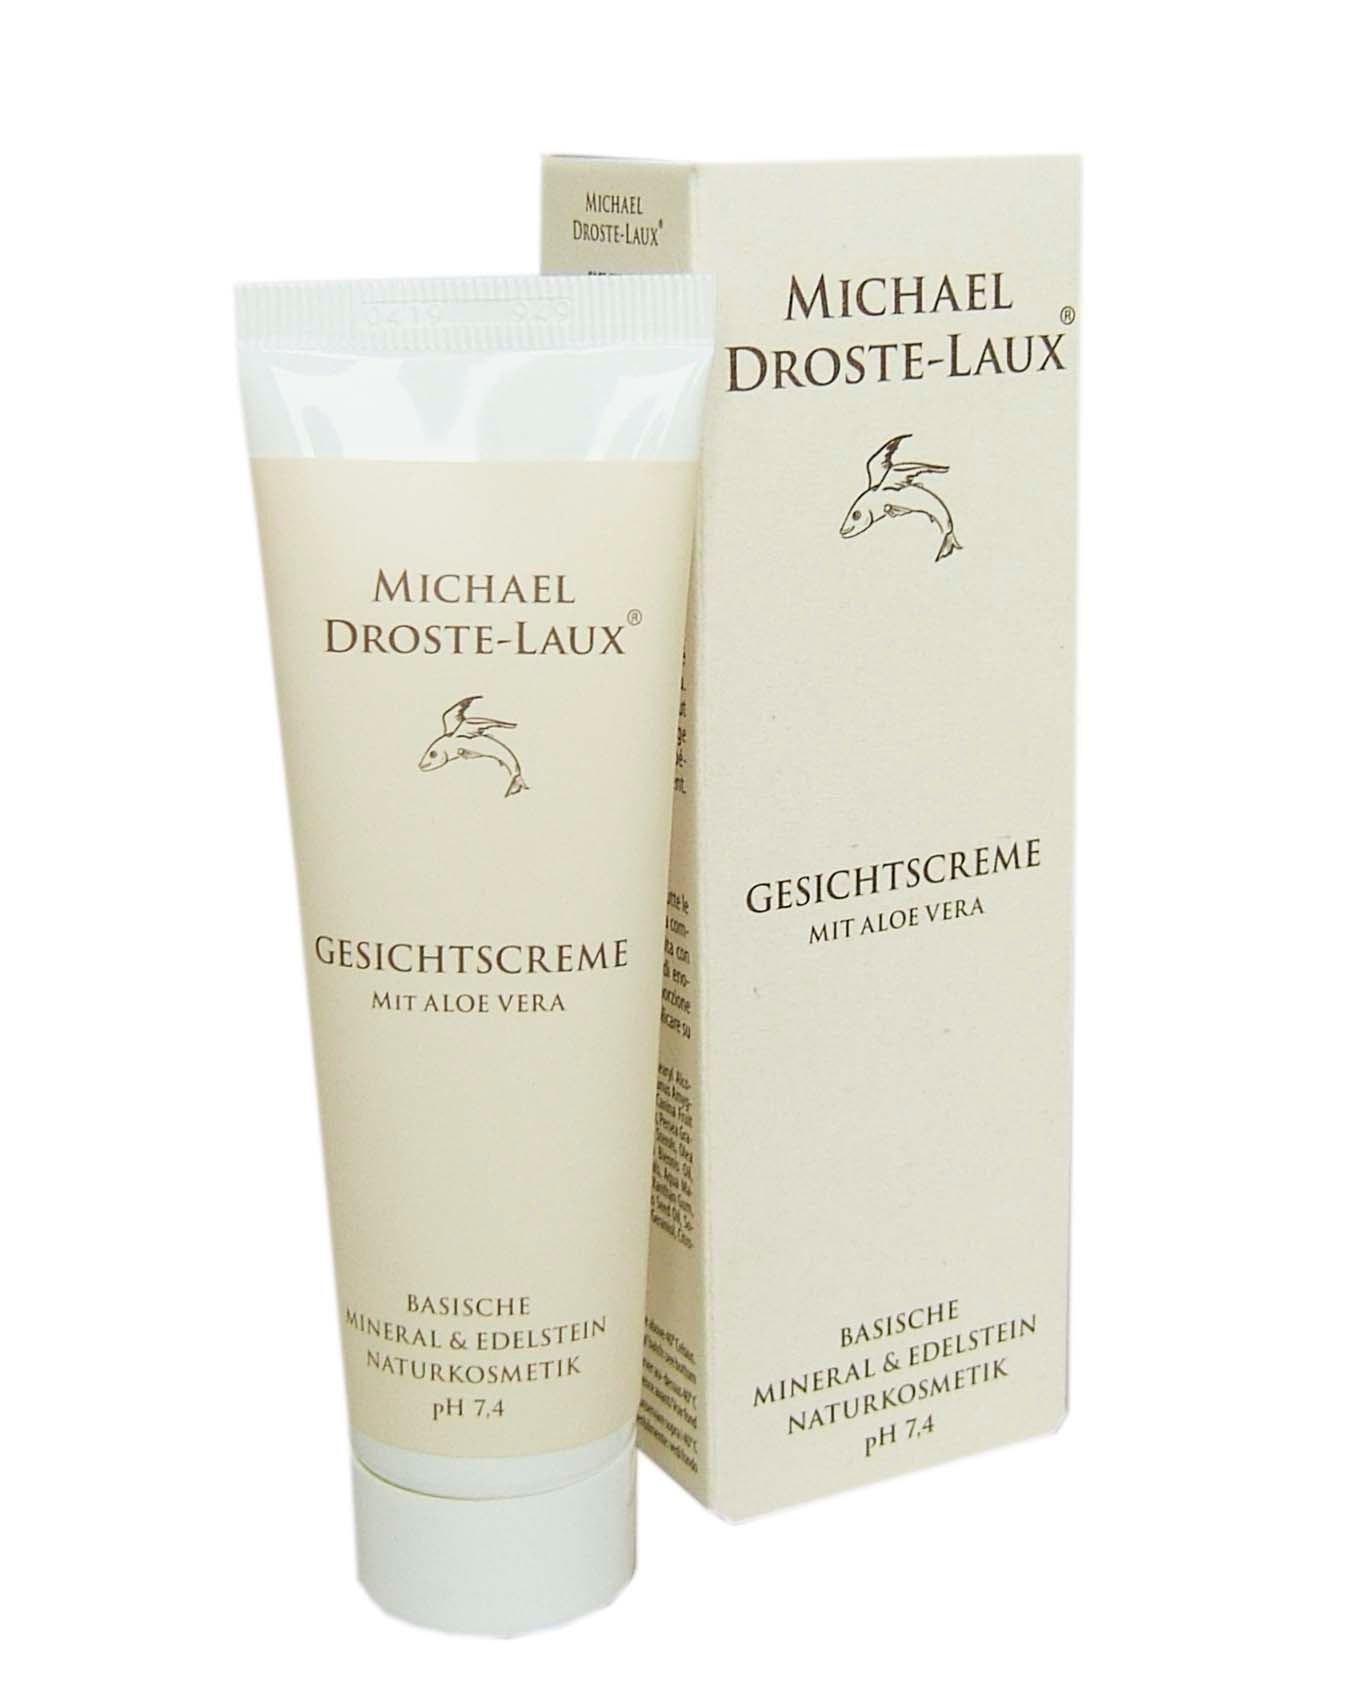 Michael Droste-Laux - Gesichtscreme mit Aloe Vera - 50 ml